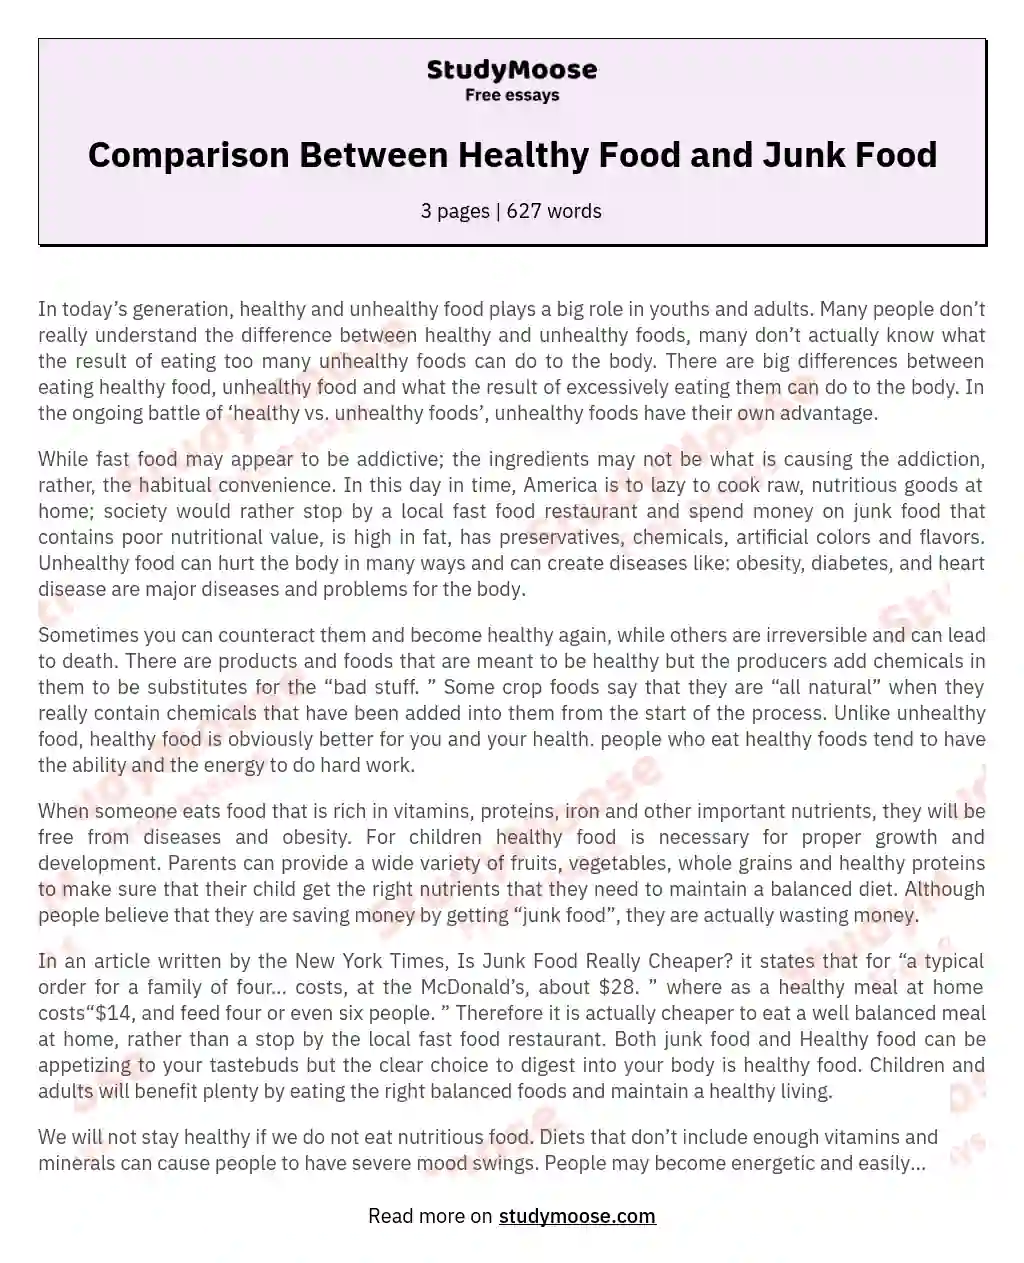 Comparison Between Healthy Food and Junk Food essay